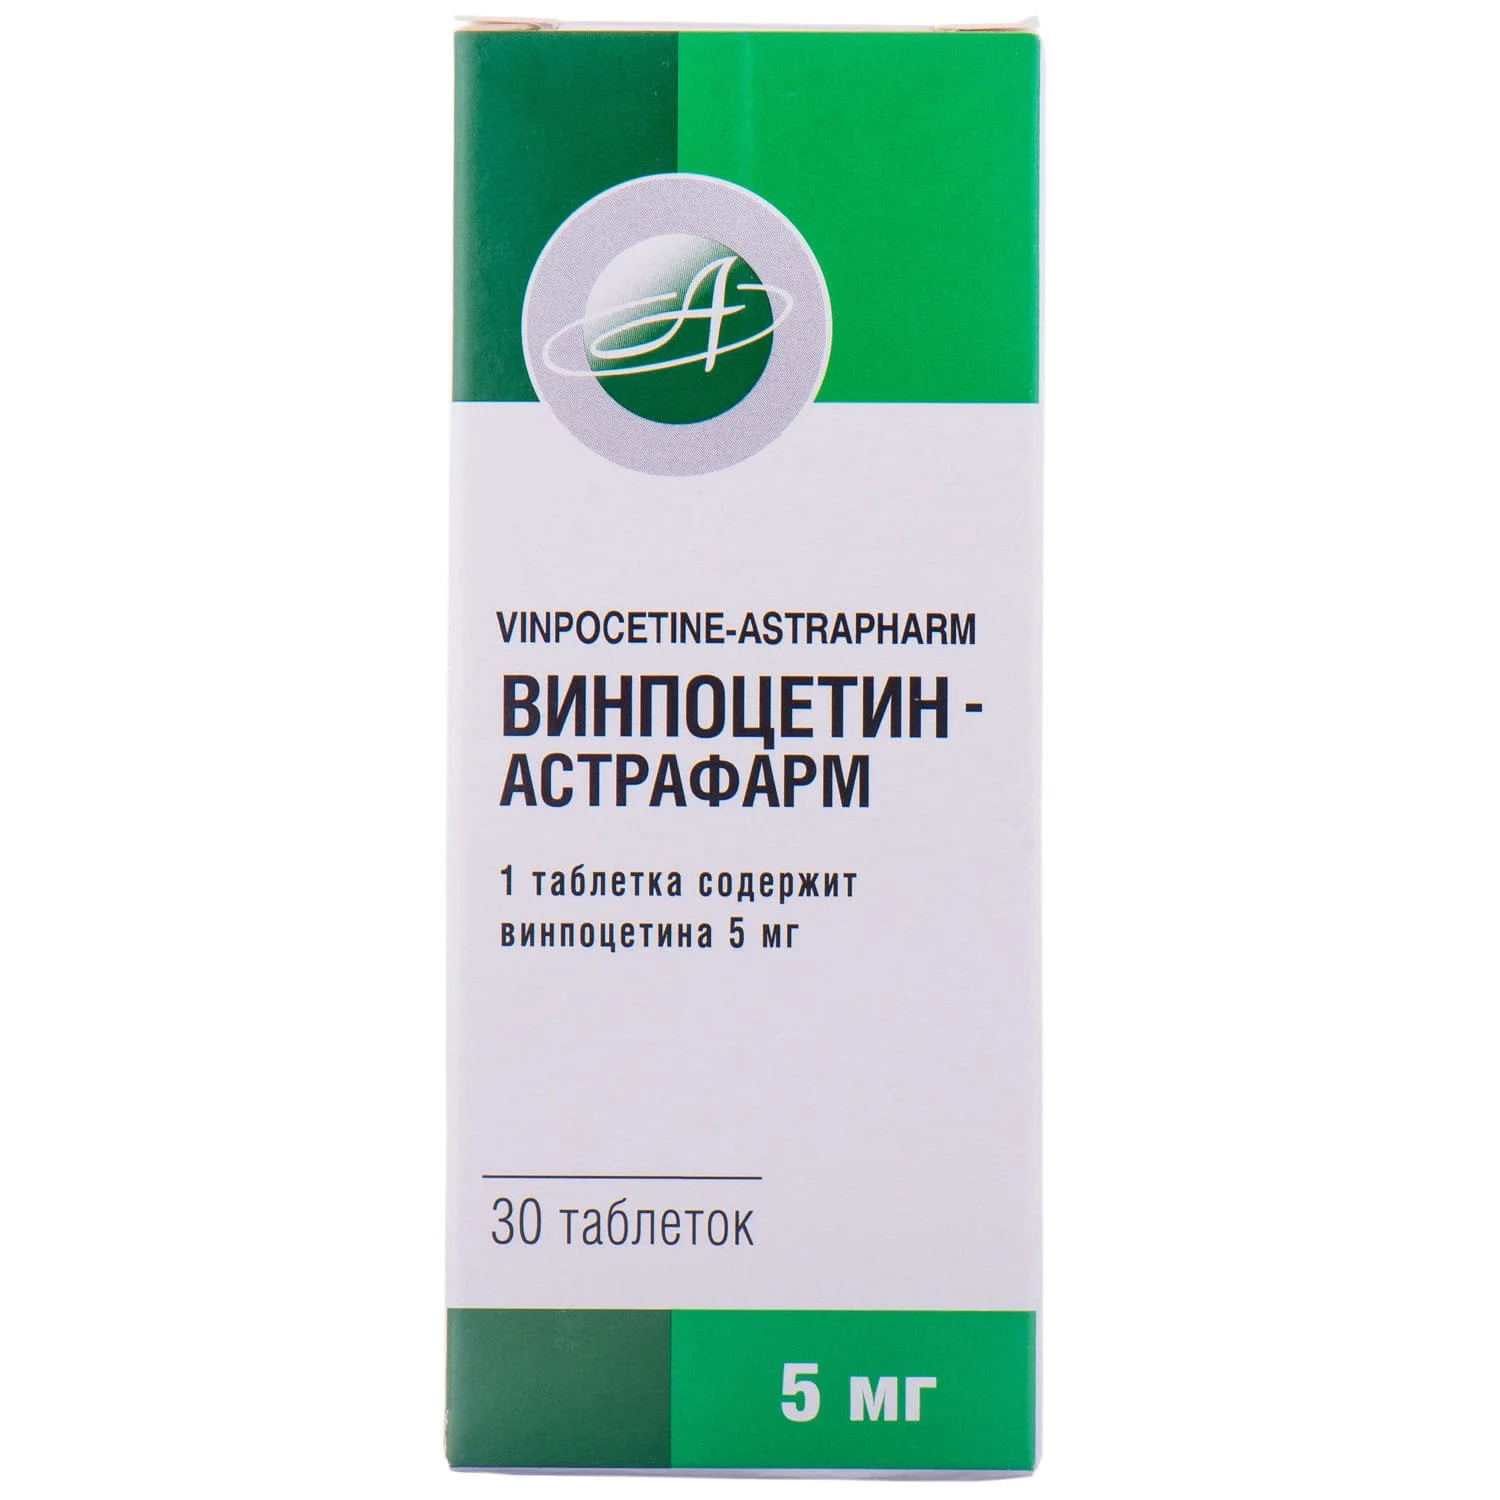 Винпоцетин 5 мг отзывы аналоги. Астрафарм. Астрафарм продукция. Винпоцетин таблетки аналоги. Винпоцетин аналоги препарата.